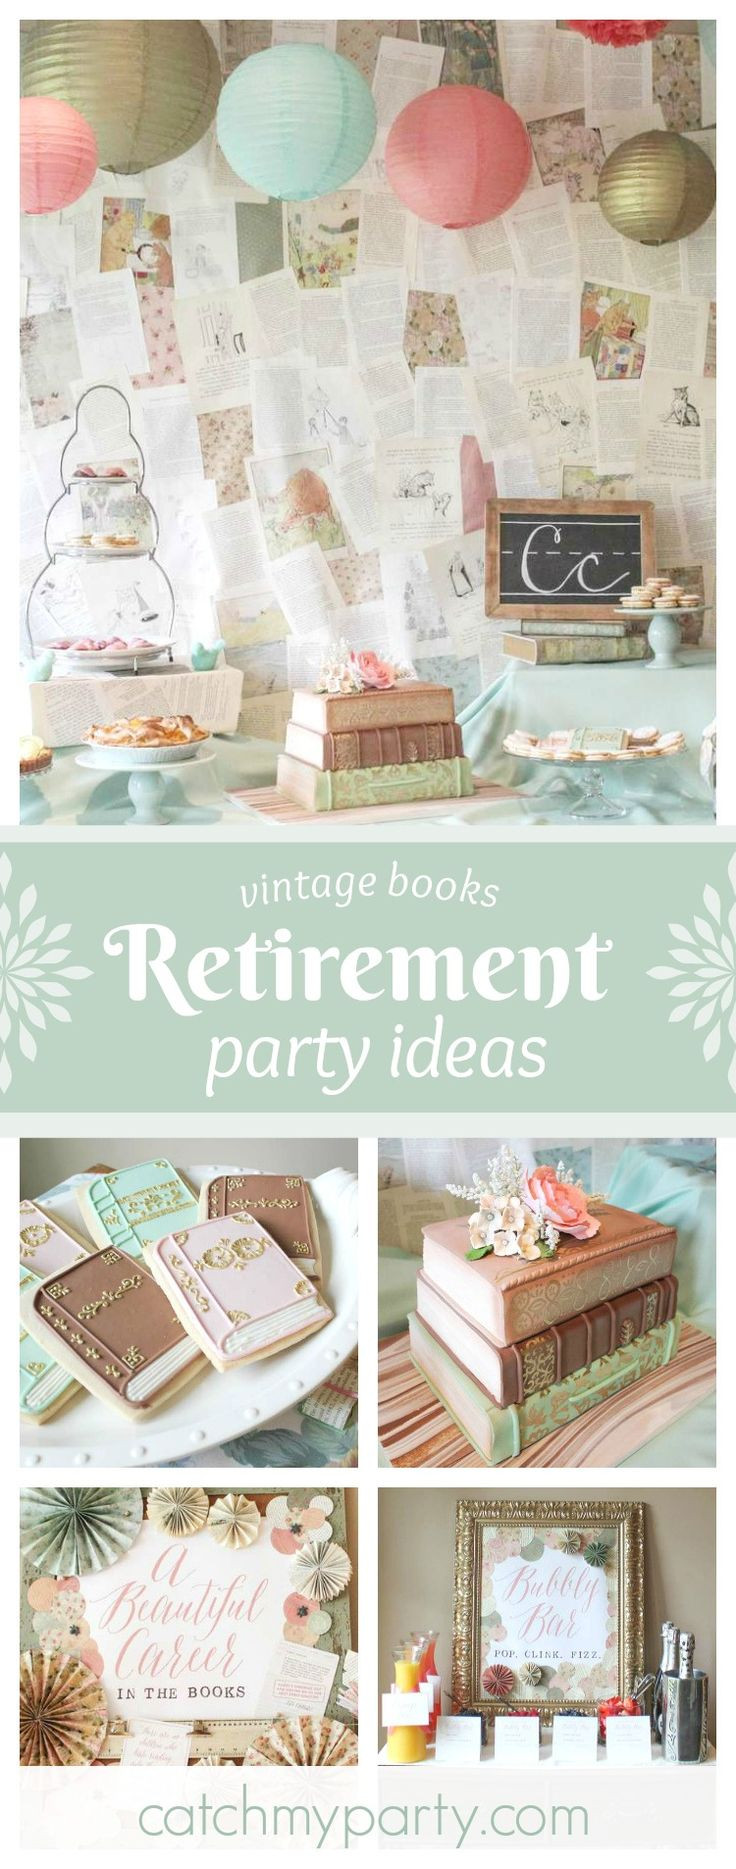 Party Retirement Ideas
 Best 25 Retirement party themes ideas on Pinterest